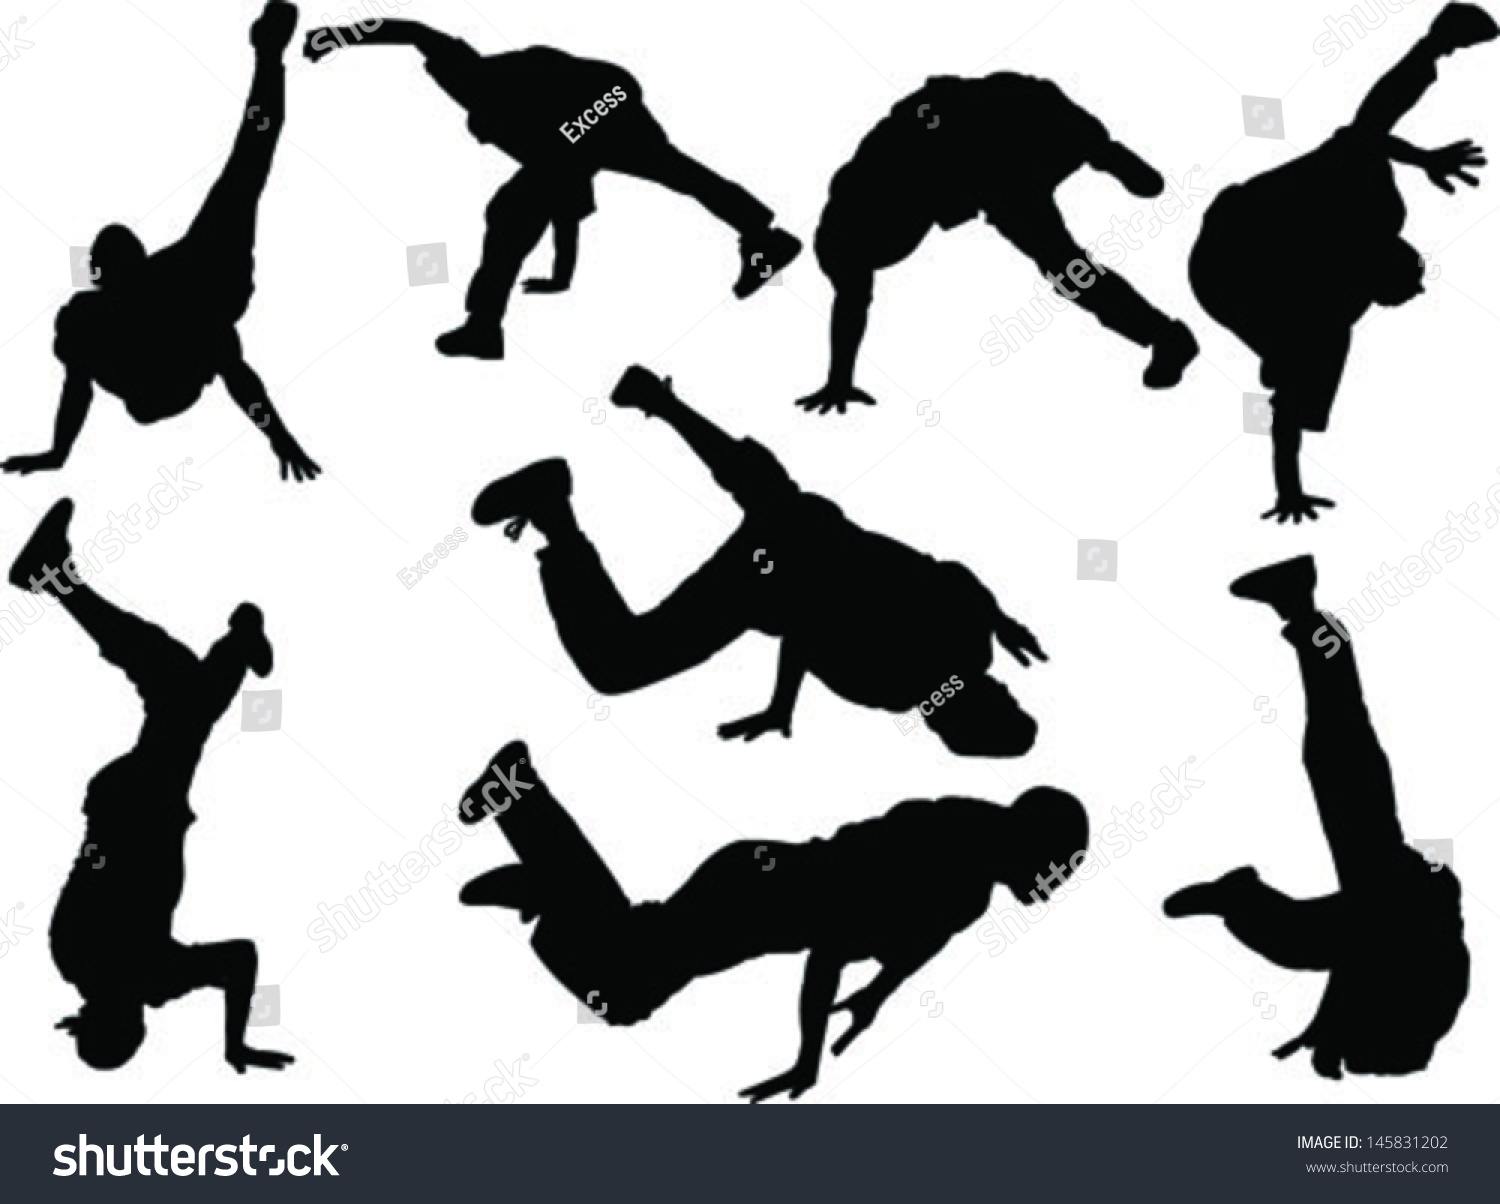 Breakdance - Vector - 145831202 : Shutterstock